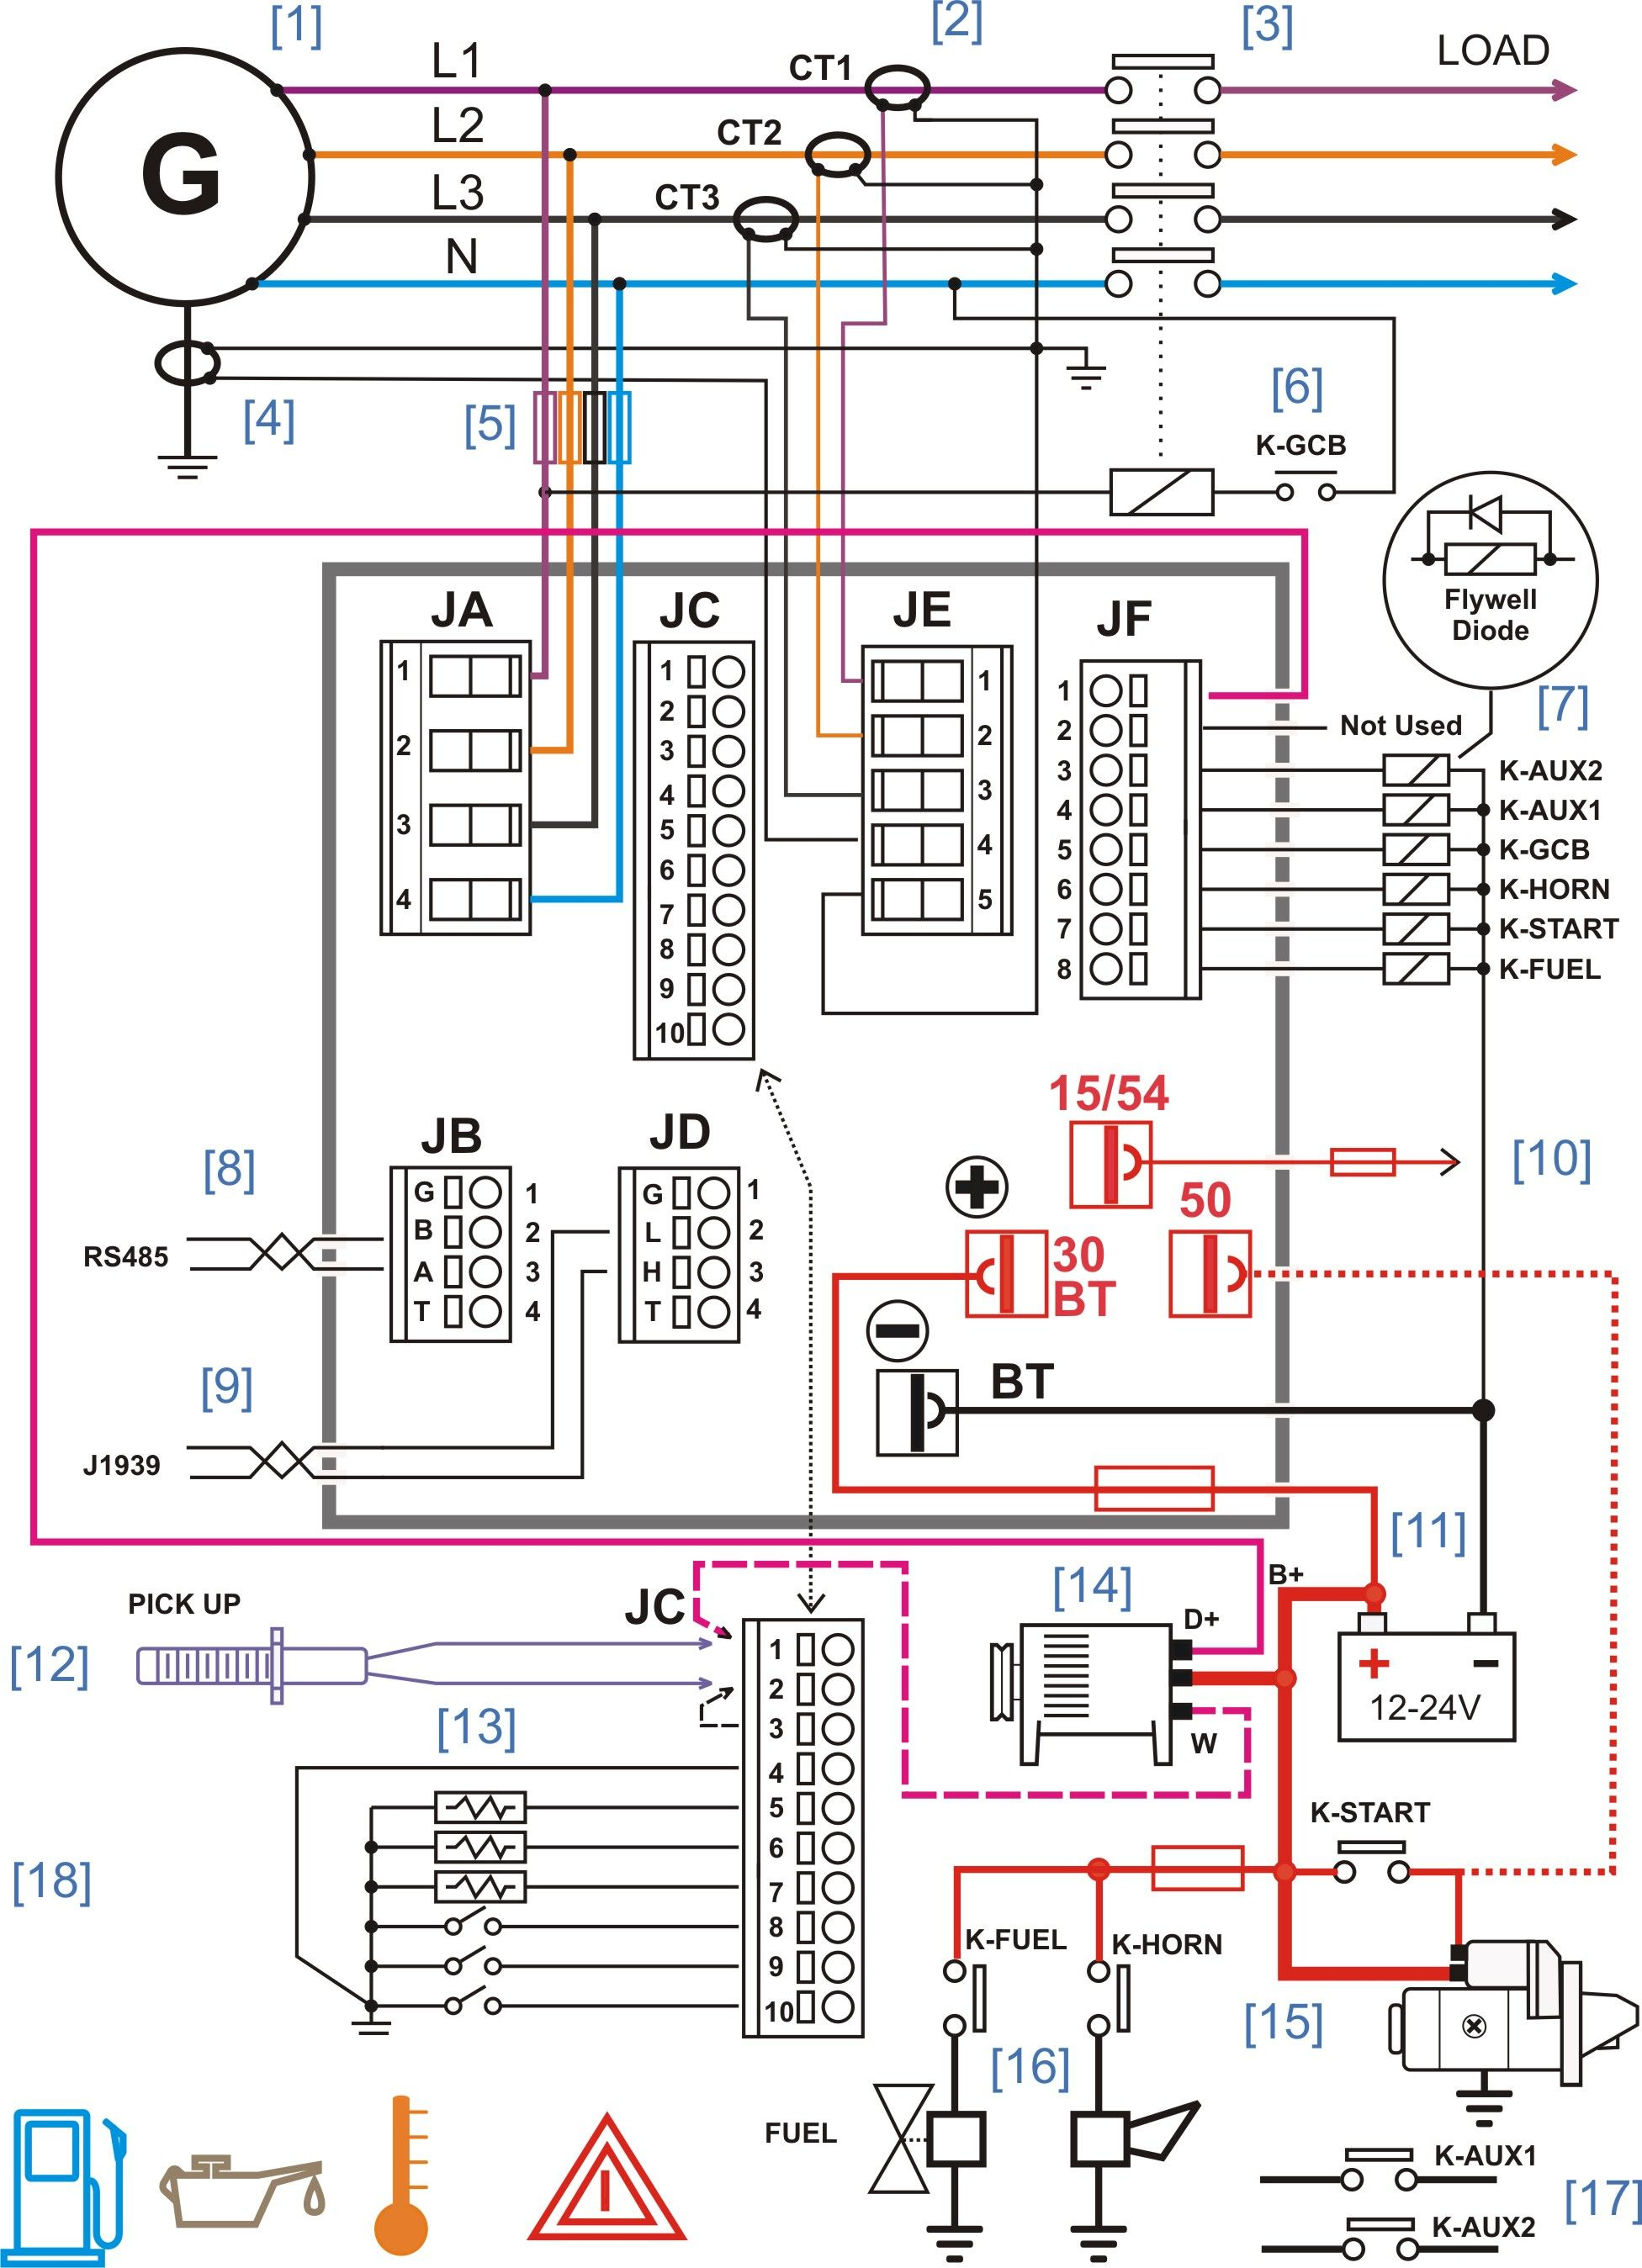 Marine Electrical Control Panel Wiring Diagram | Manual E-Books - Electrical Panel Wiring Diagram